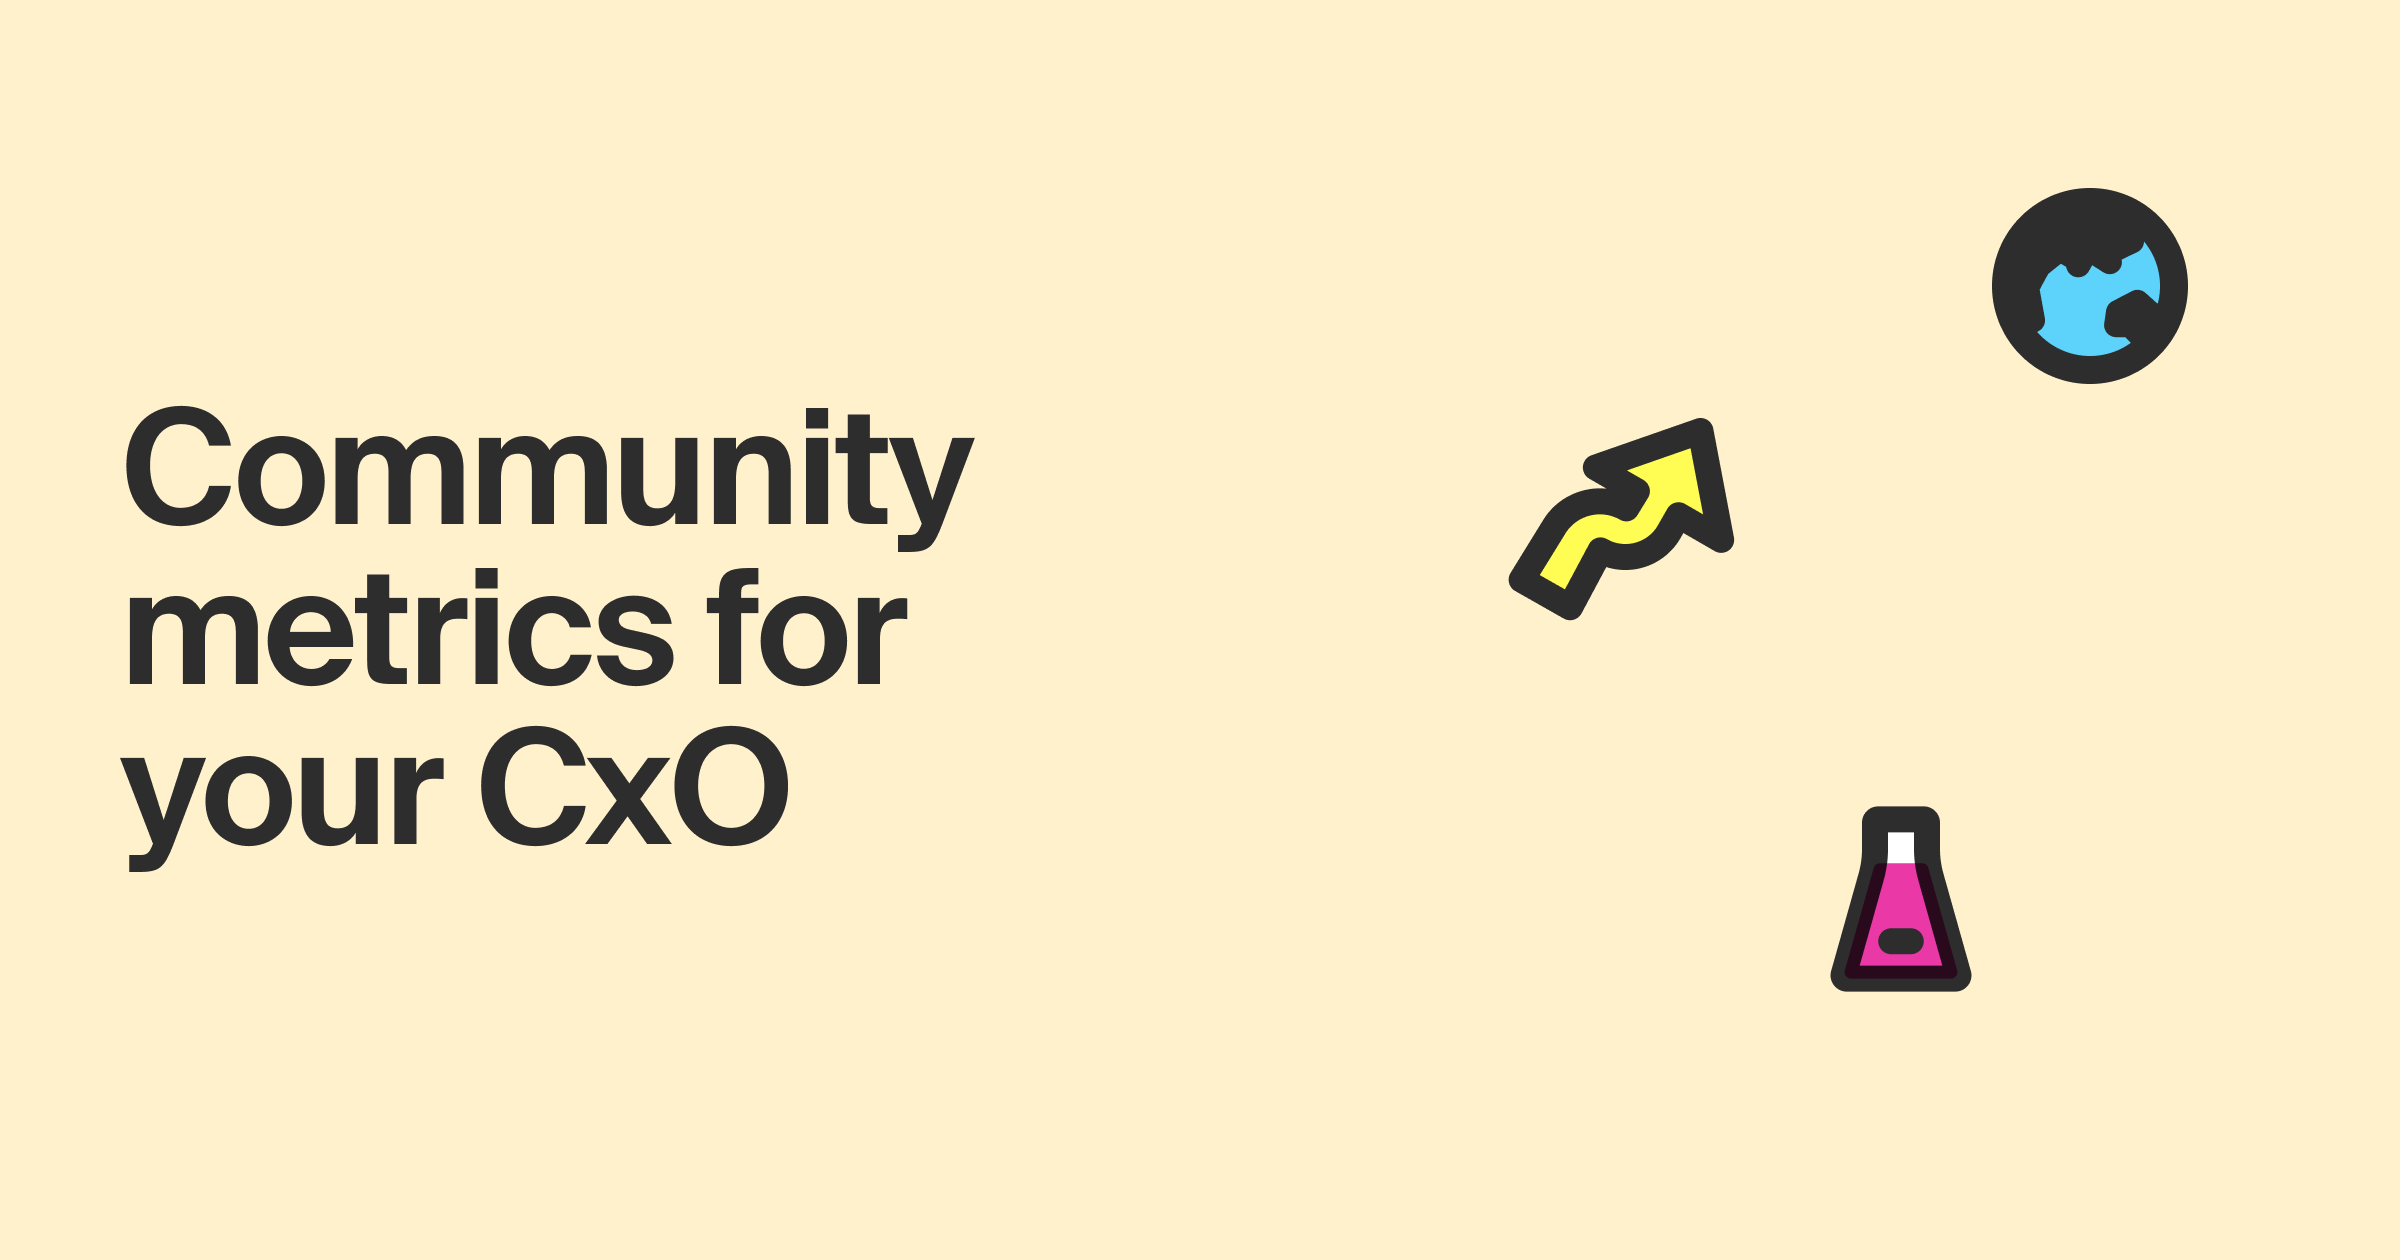 Community metrics for your CxO